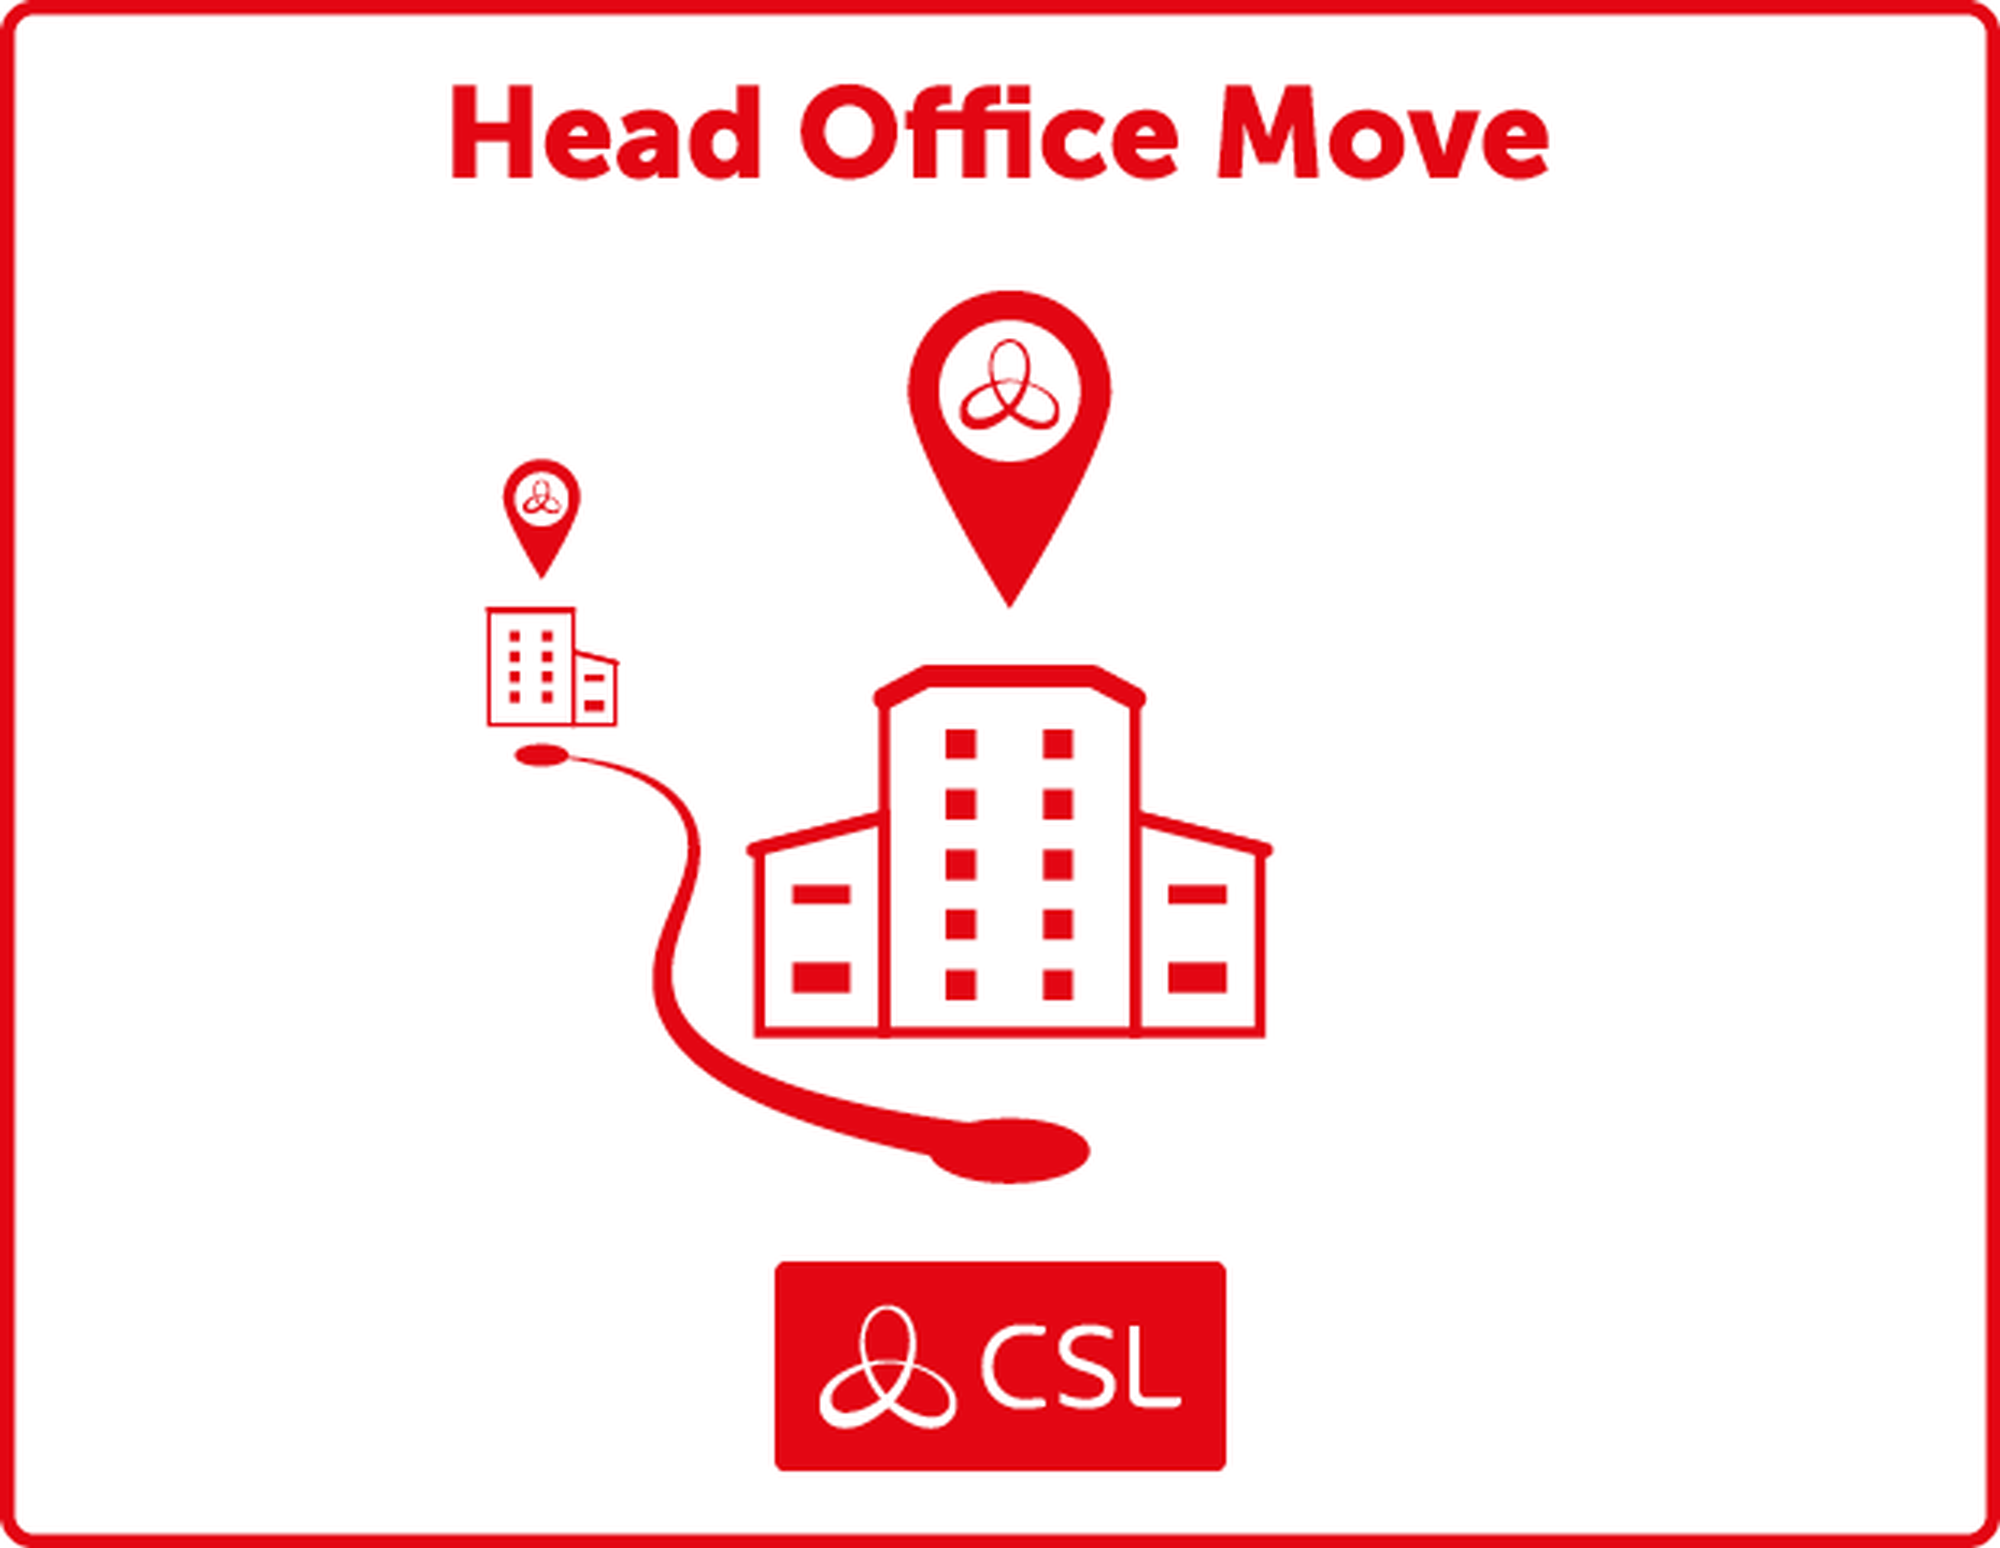 CSL ANNOUNCES HEAD OFFICE MOVE